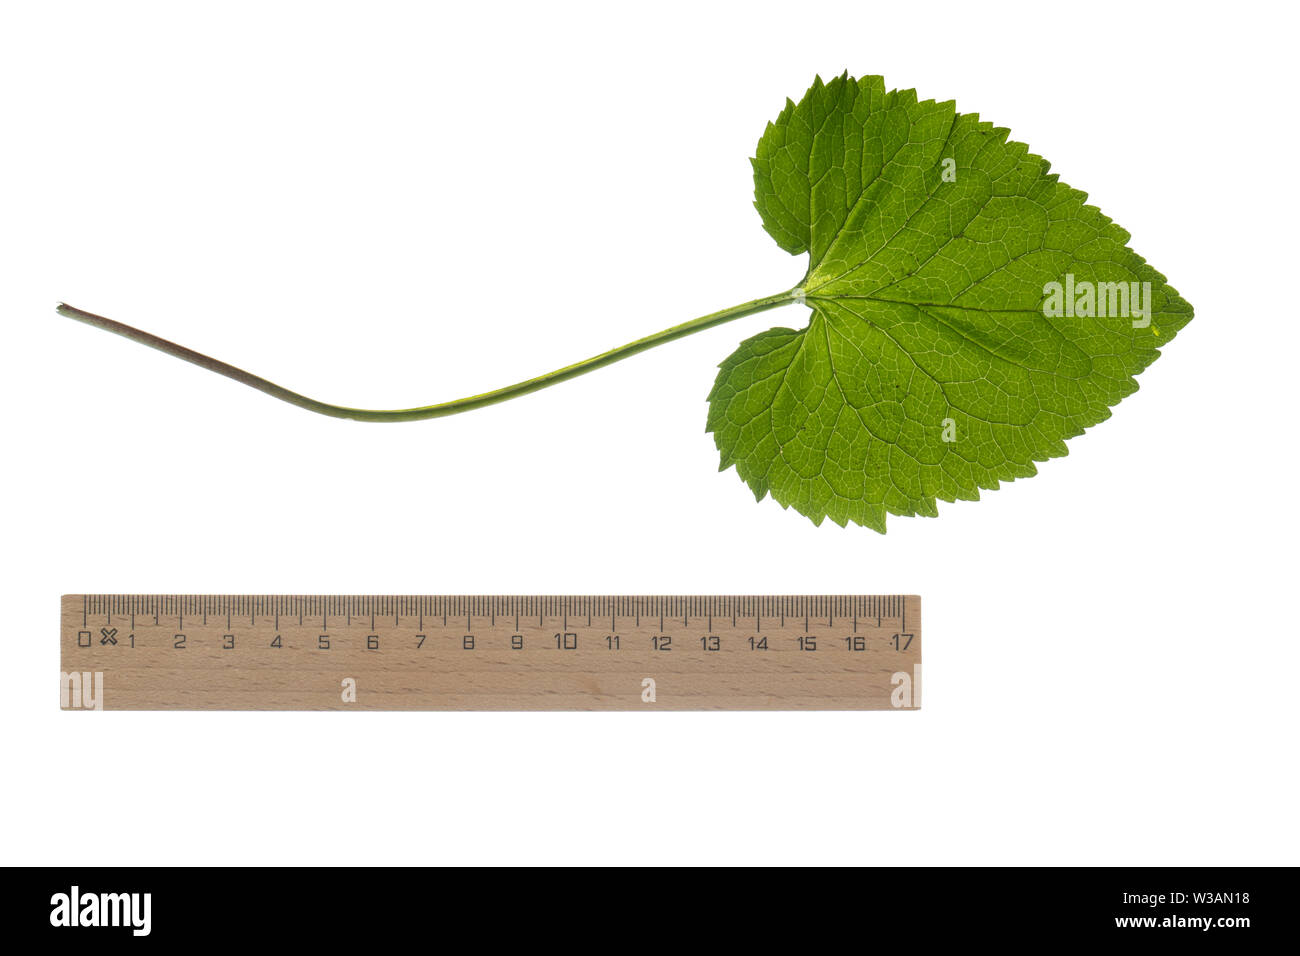 Ährige Teufelskralle, Weiße Teufelskralle, Phyteuma spicatum, spiked rampion, La Raiponce en épi. Blatt, Blätter, leaf, leaves Stock Photo